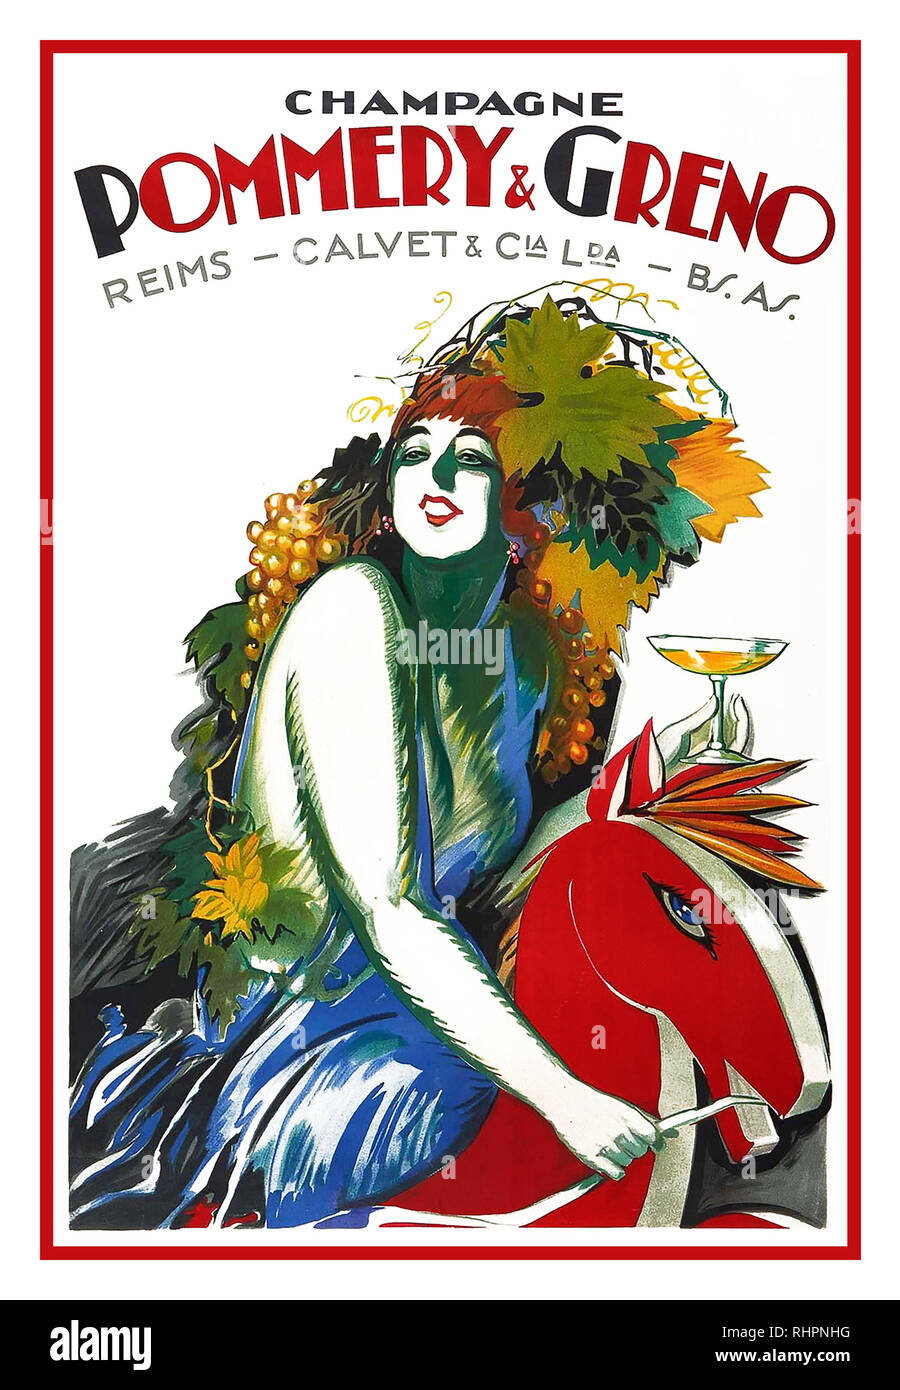 Vintage Art Deco French Champagne Pommery & Greno Champagne Affiche Poster Design et graphisme par Achille LUCIANO MAUZAN Lithographie 1925 Banque D'Images